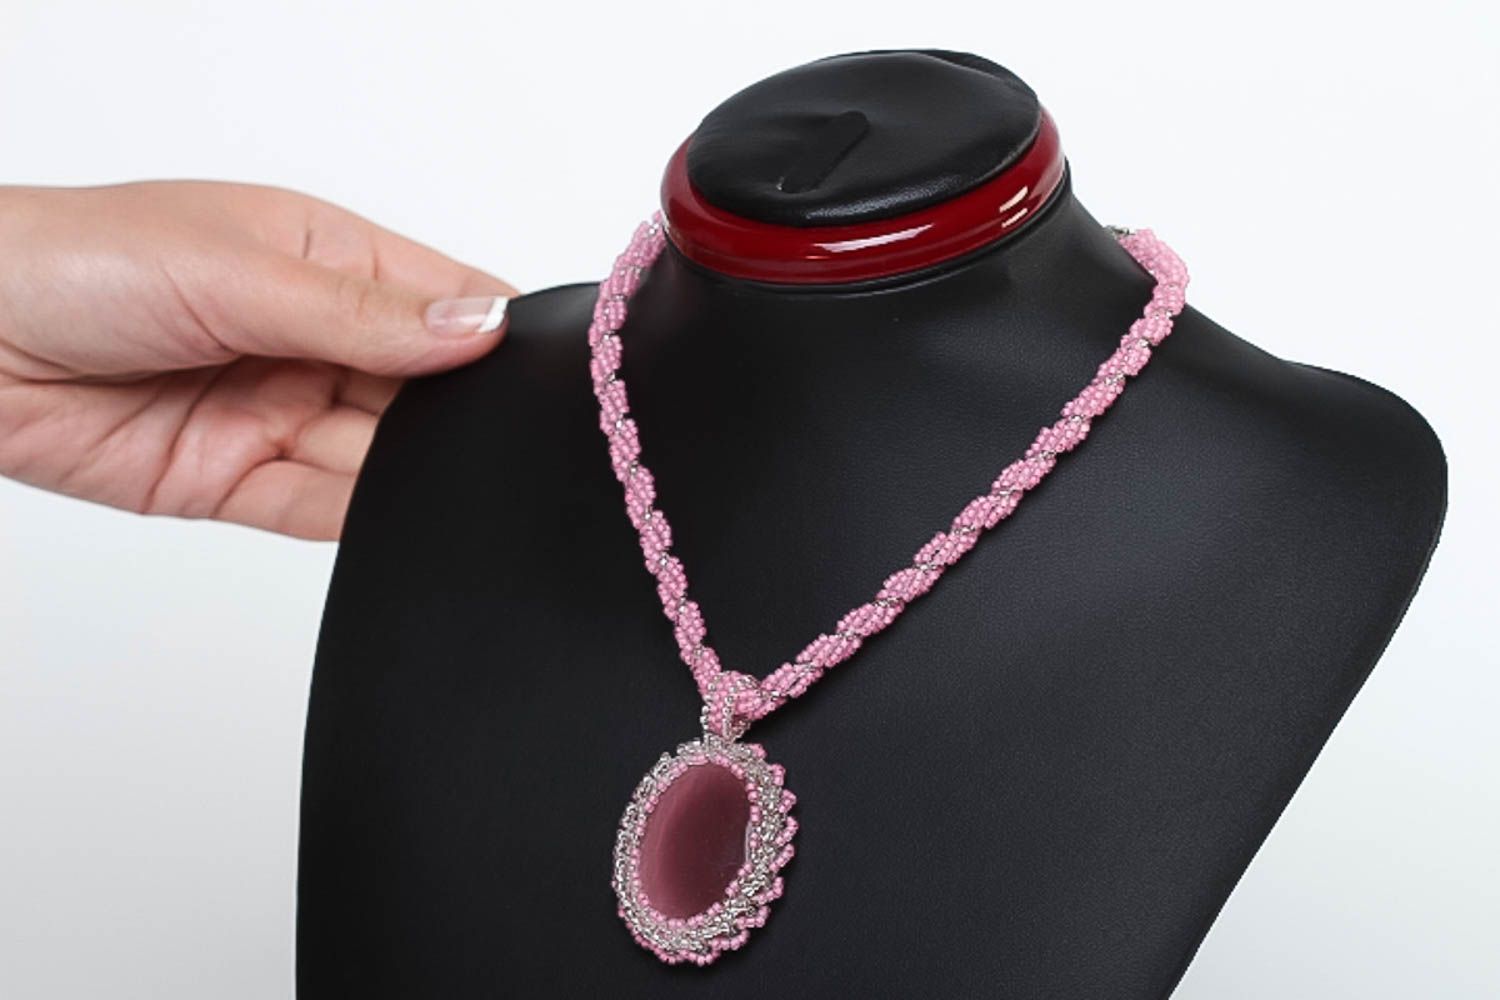 Stylish handmade beaded necklace gemstone pendant necklace jewelry designs photo 5